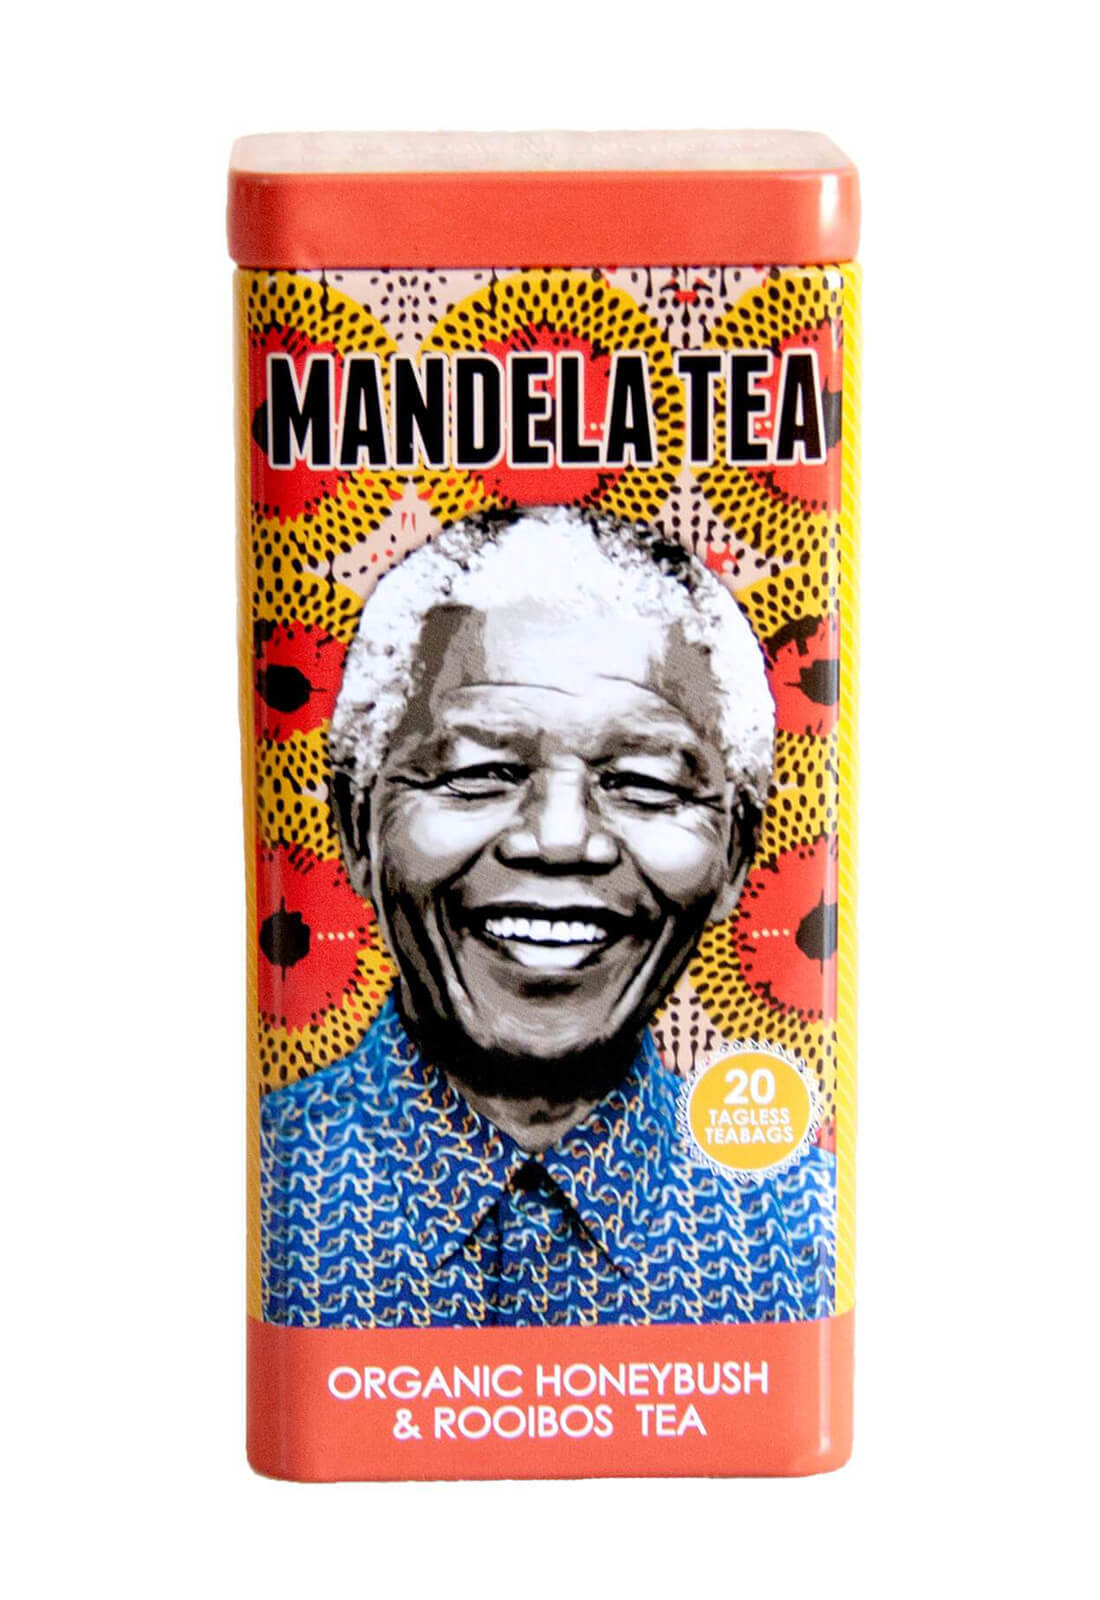 Mandela Tea Commemorative Tea Tin, Organic Honeybush and Rooibos Tea Blend